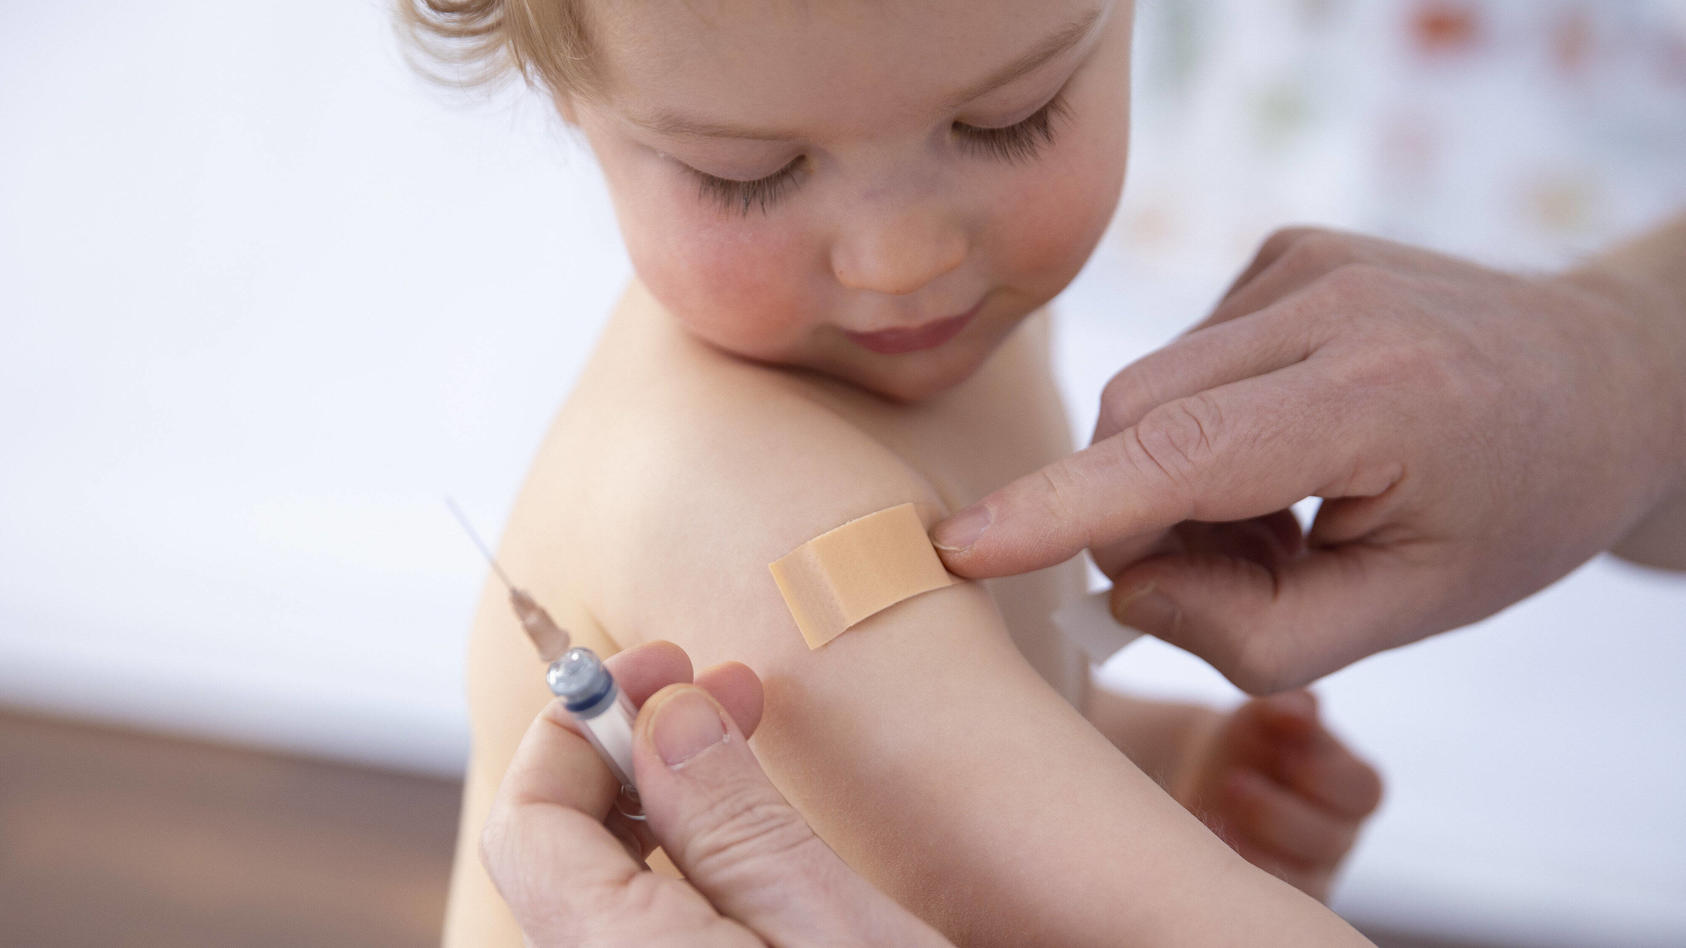 Thema: Impfung von Kindern. Bonn Deutschland *** Topic Vaccination of children Bonn Germany Copyright: xUtexGrabowsky/photothek.netx 